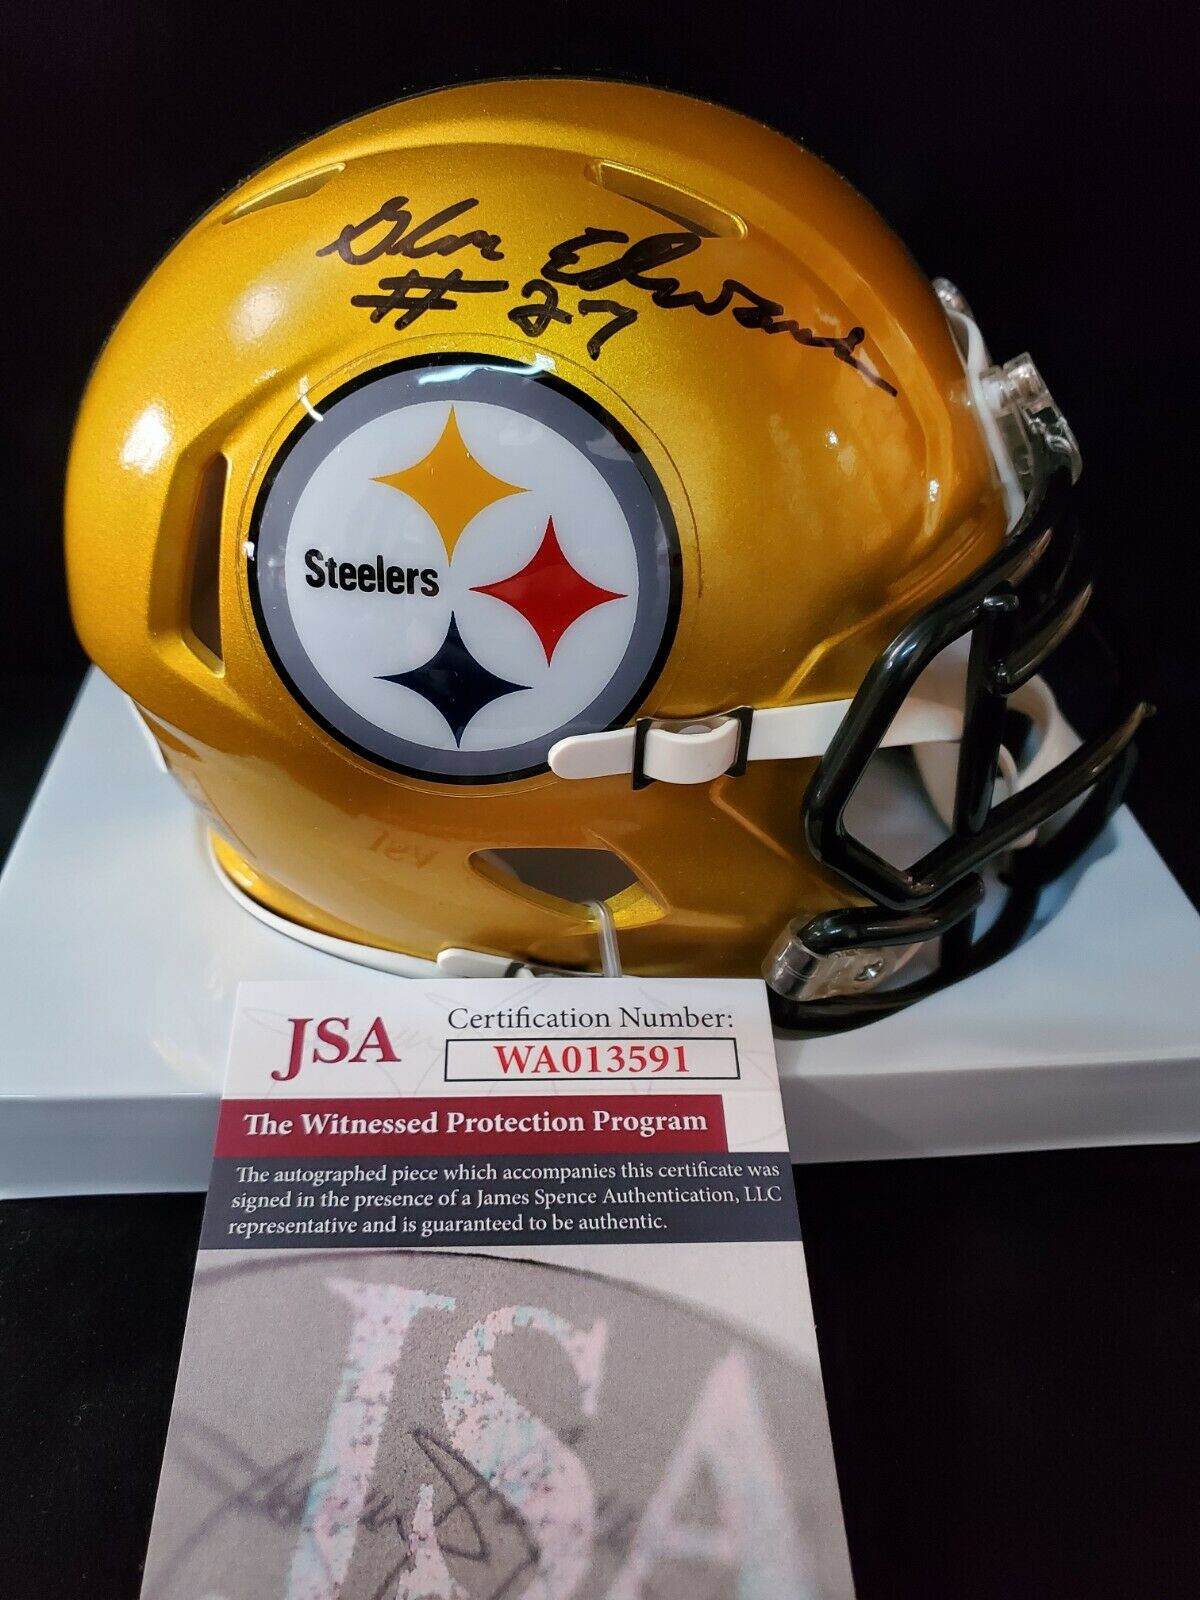 Pittsburgh Steelers Jersey - B&C Custom Framing